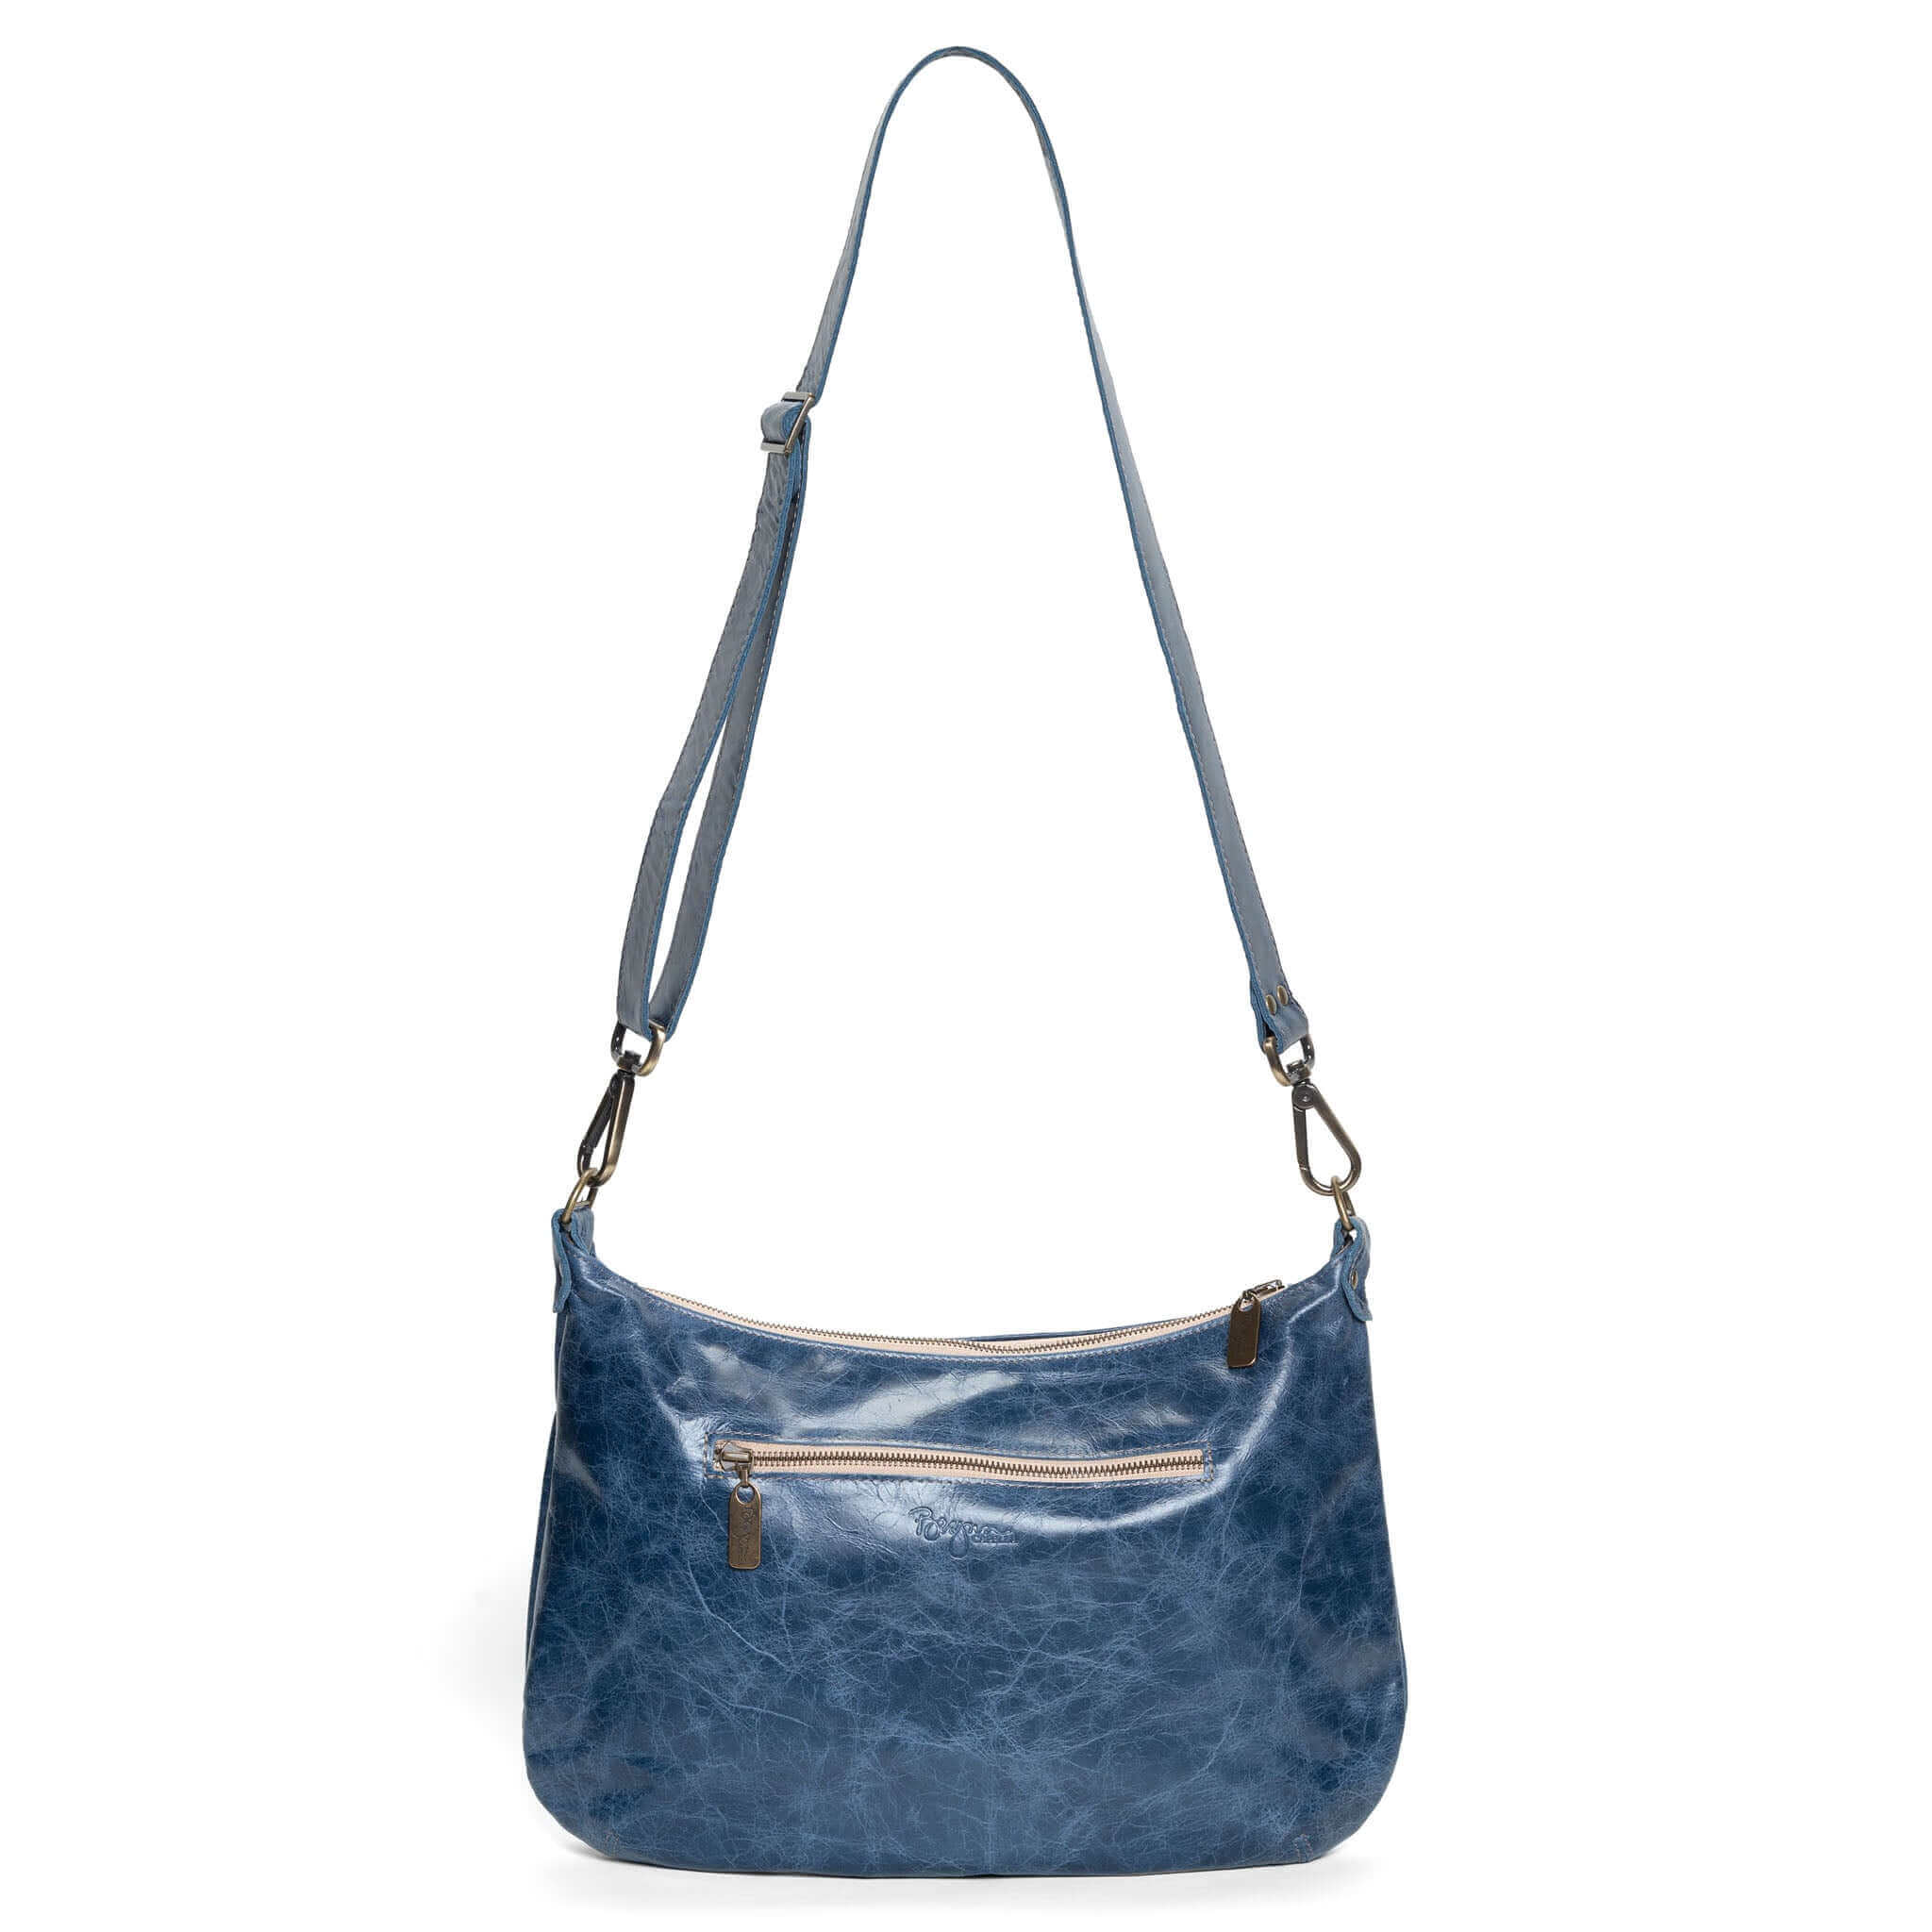 Hobo Crossbody bag, Blue Italian leather, made in USA